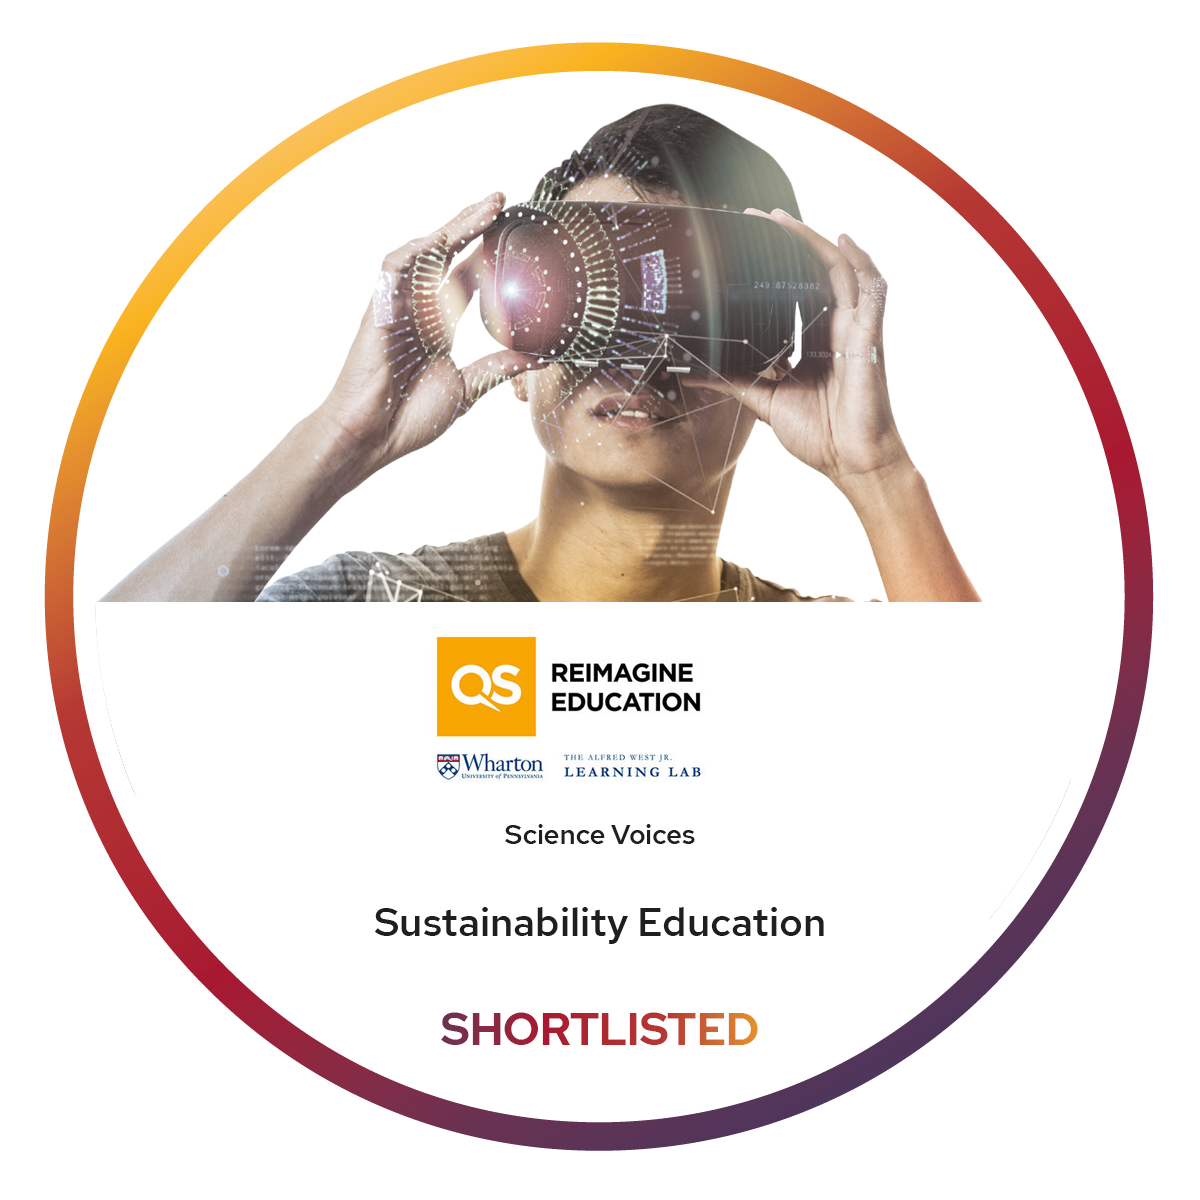 QS Reimagine Education - Shortlisted - Sustainability Education (2022)